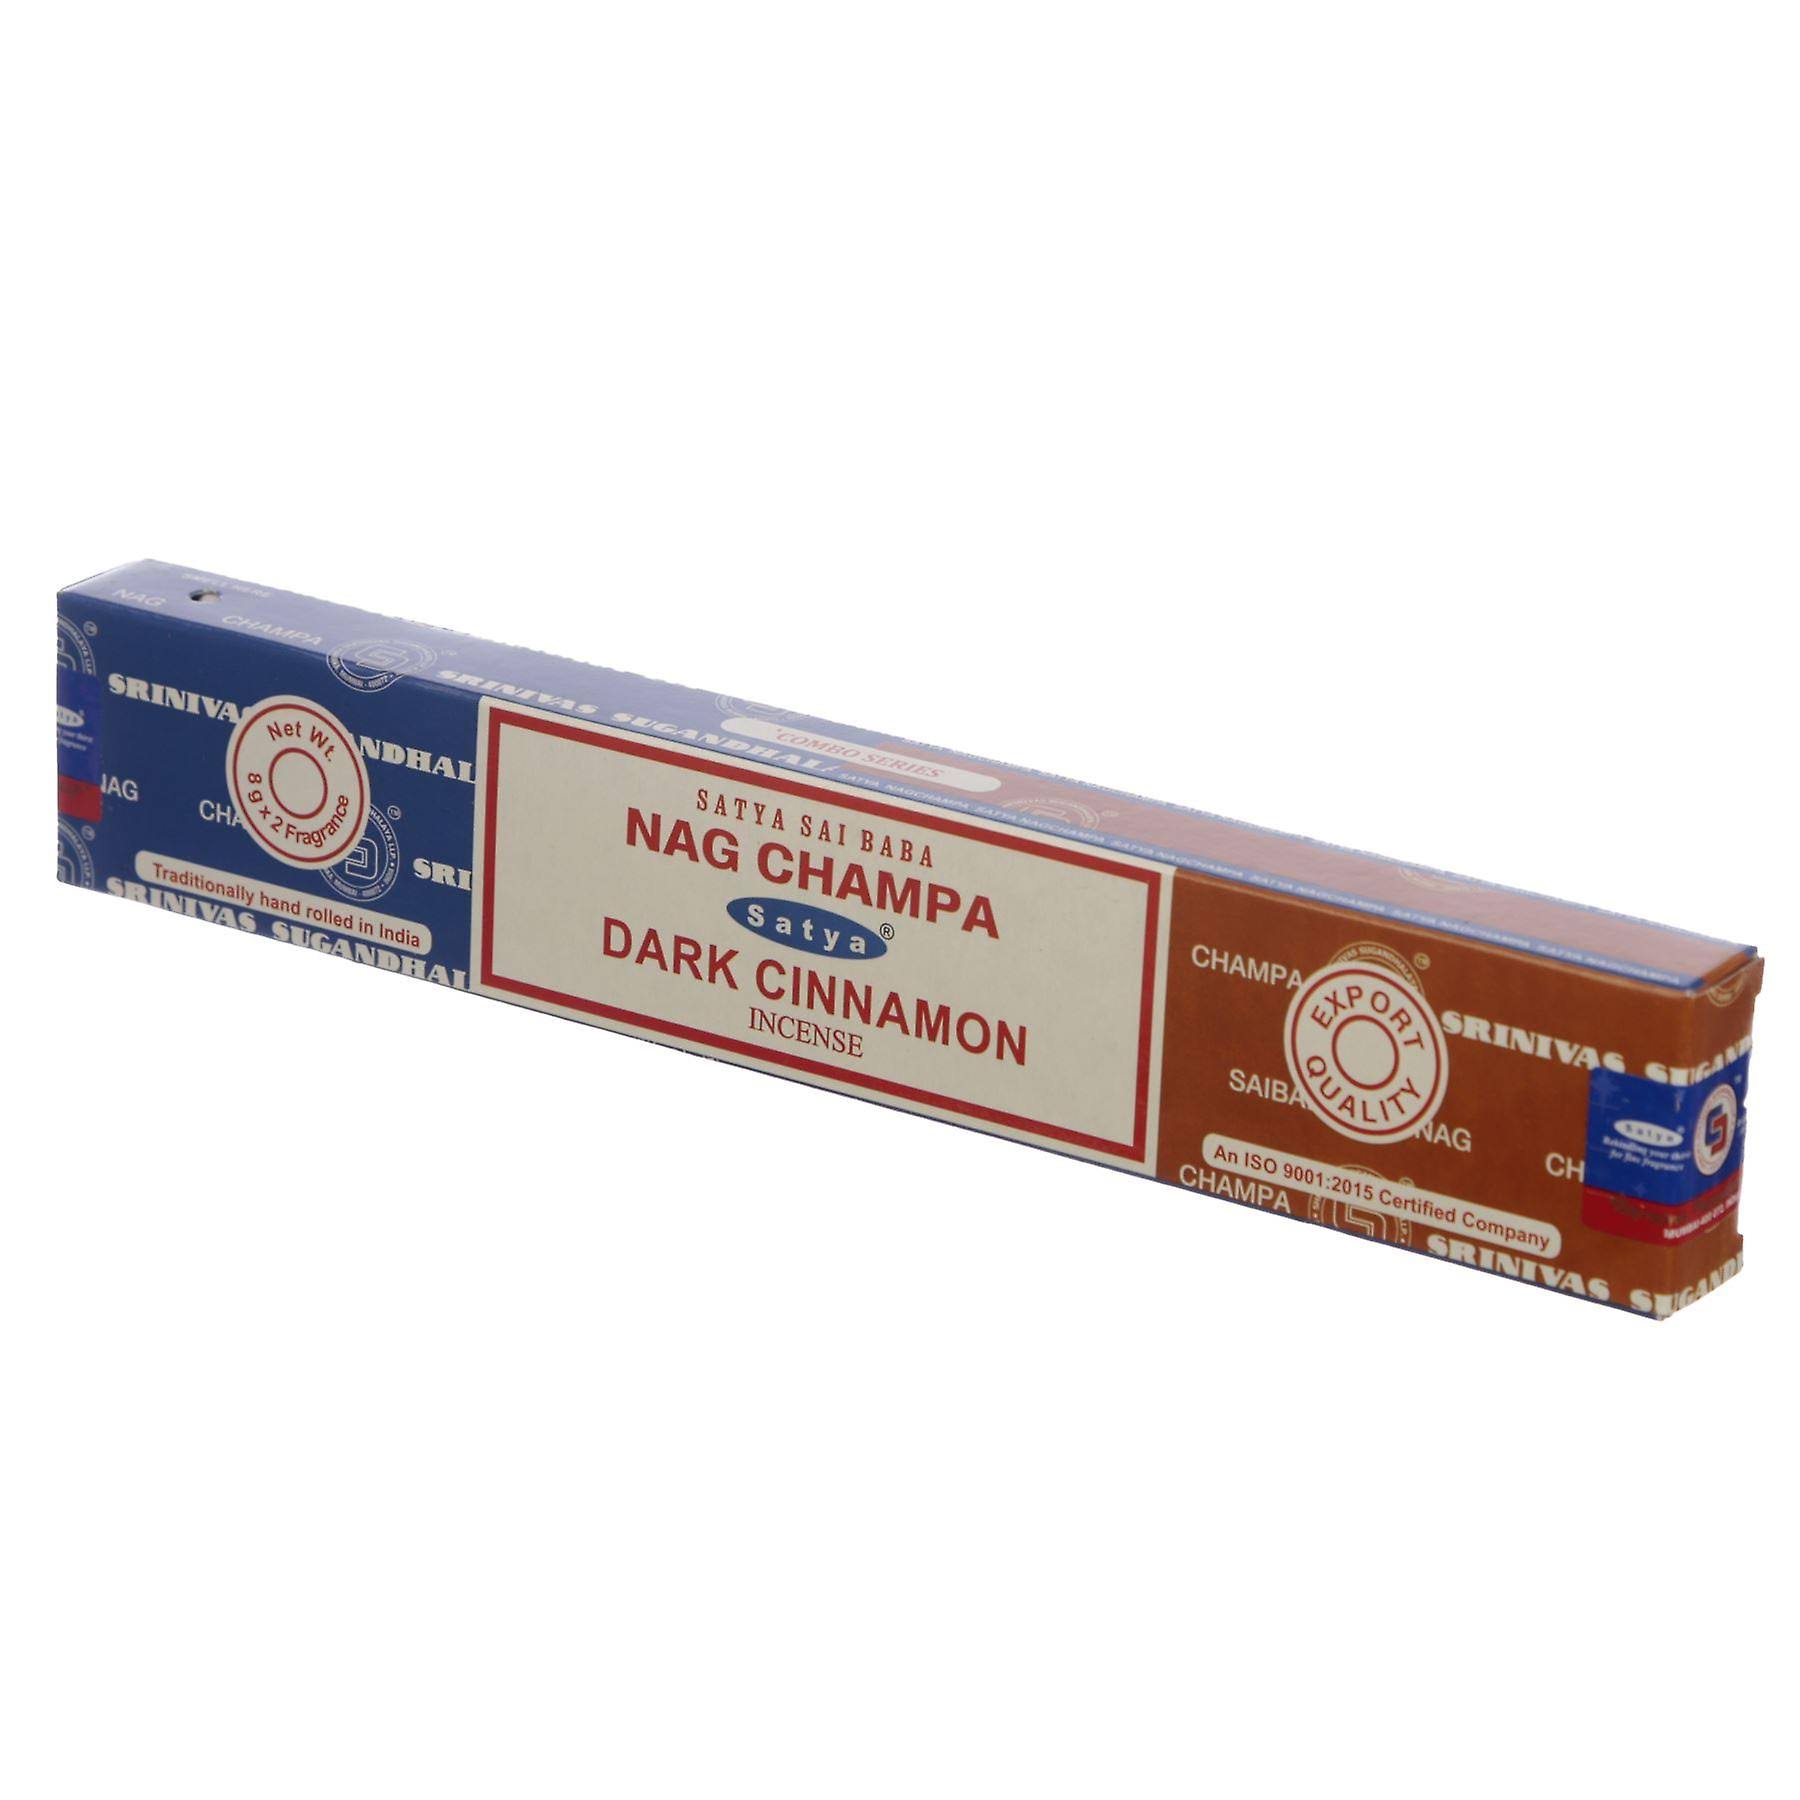 01310 Satya Nag Champa & Dark Cinnamon Incense Sticks (per pack)